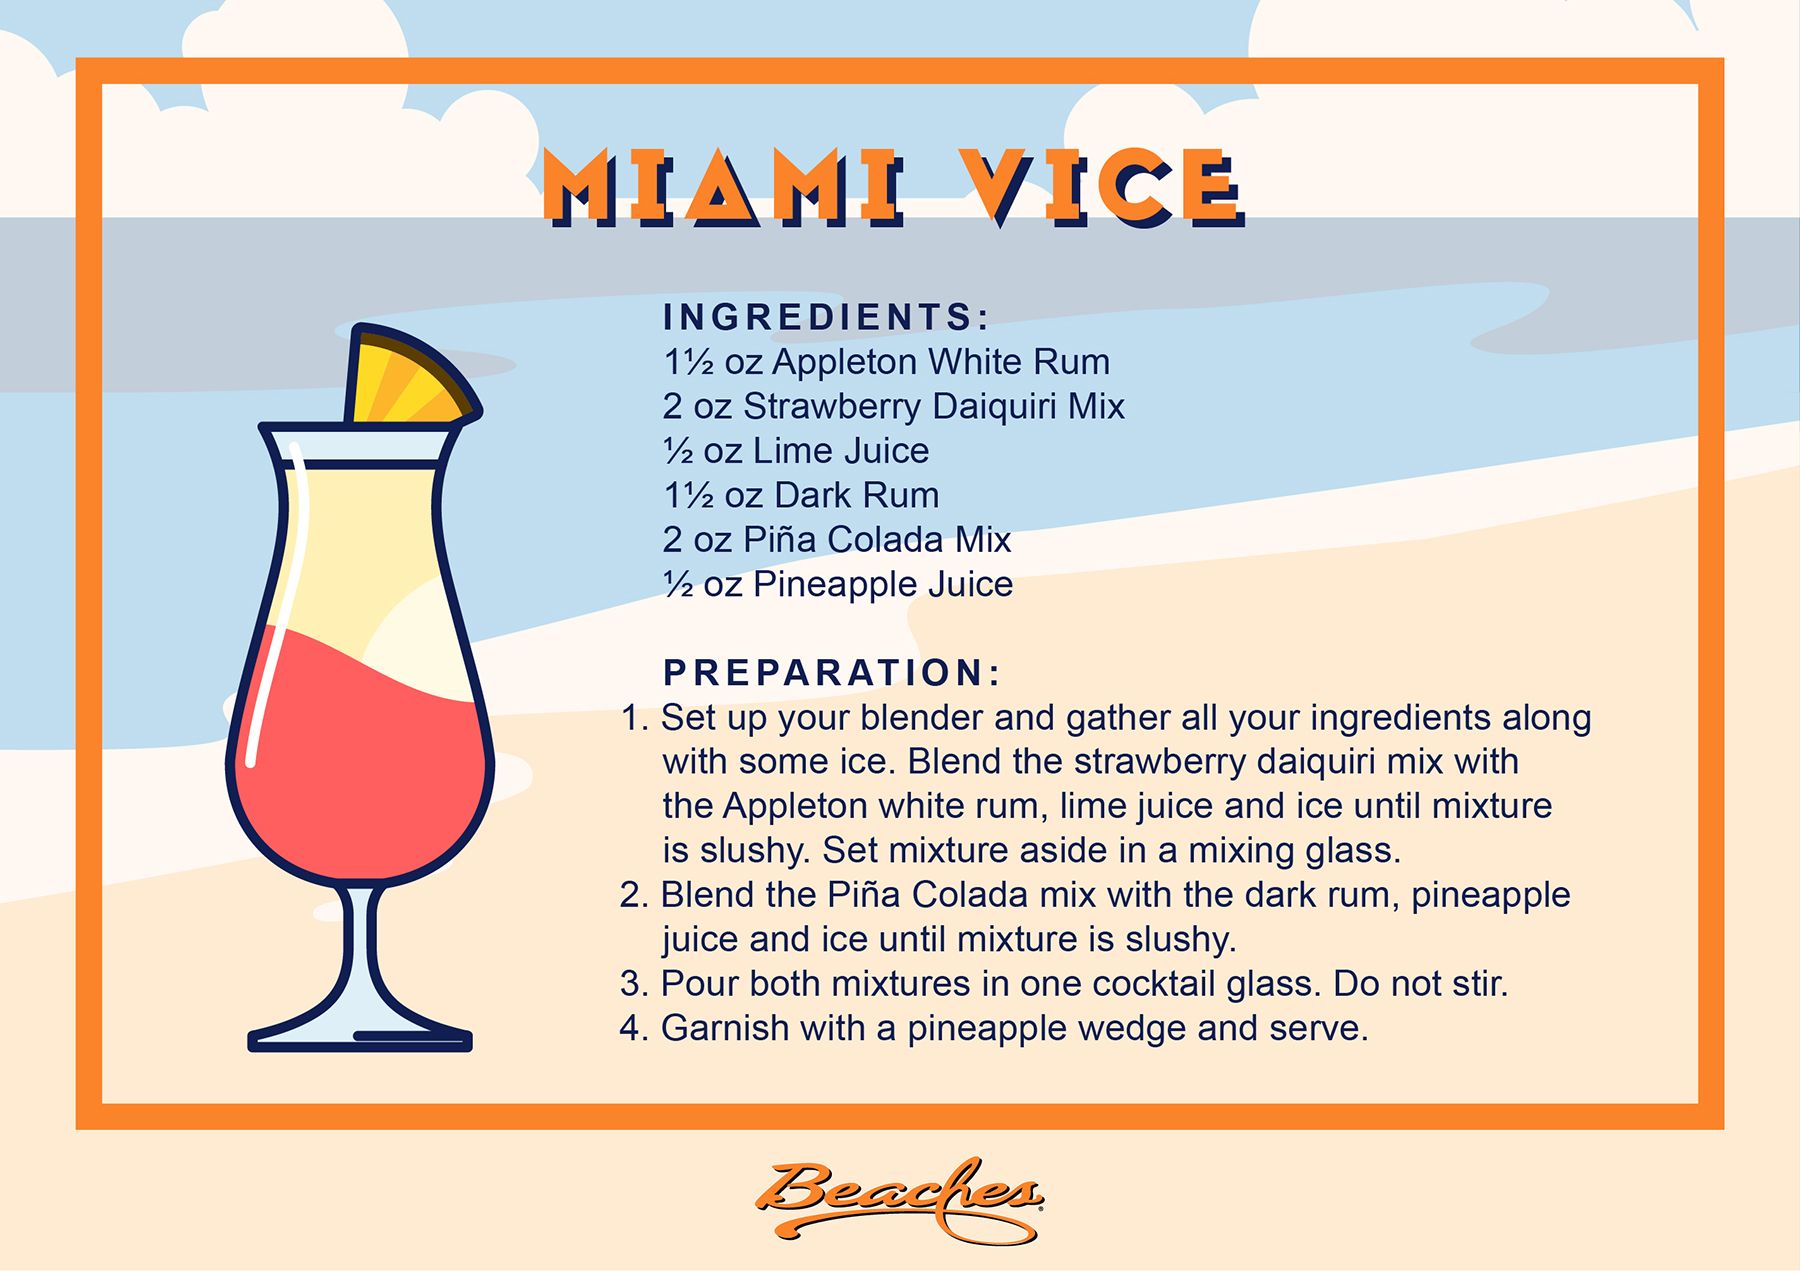 Beaches Cocktail Recipe Cards Miami Vice